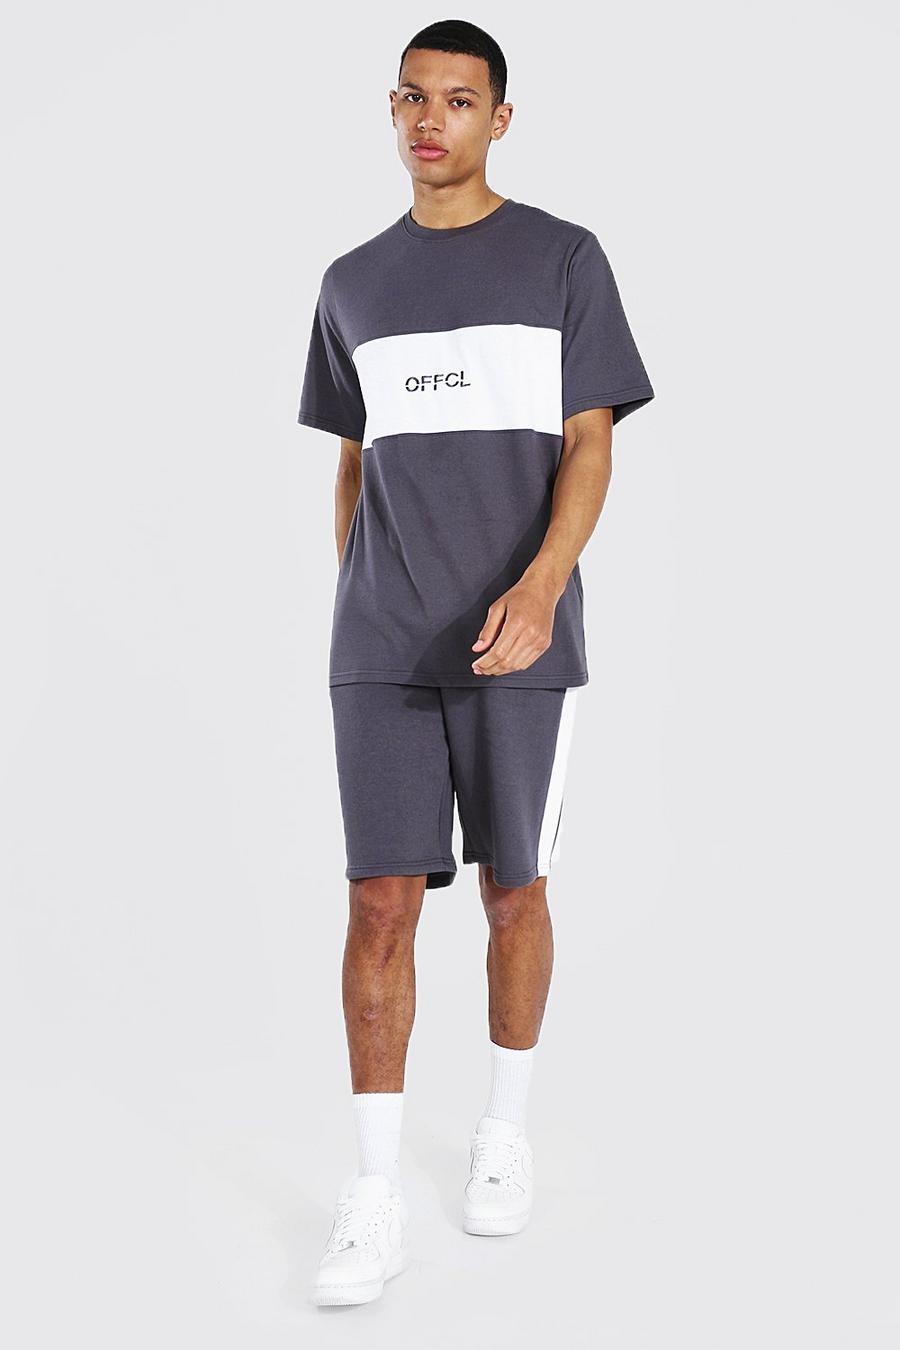 Tall - Ensemble t-shirt et short Official, Ardoise grey image number 1